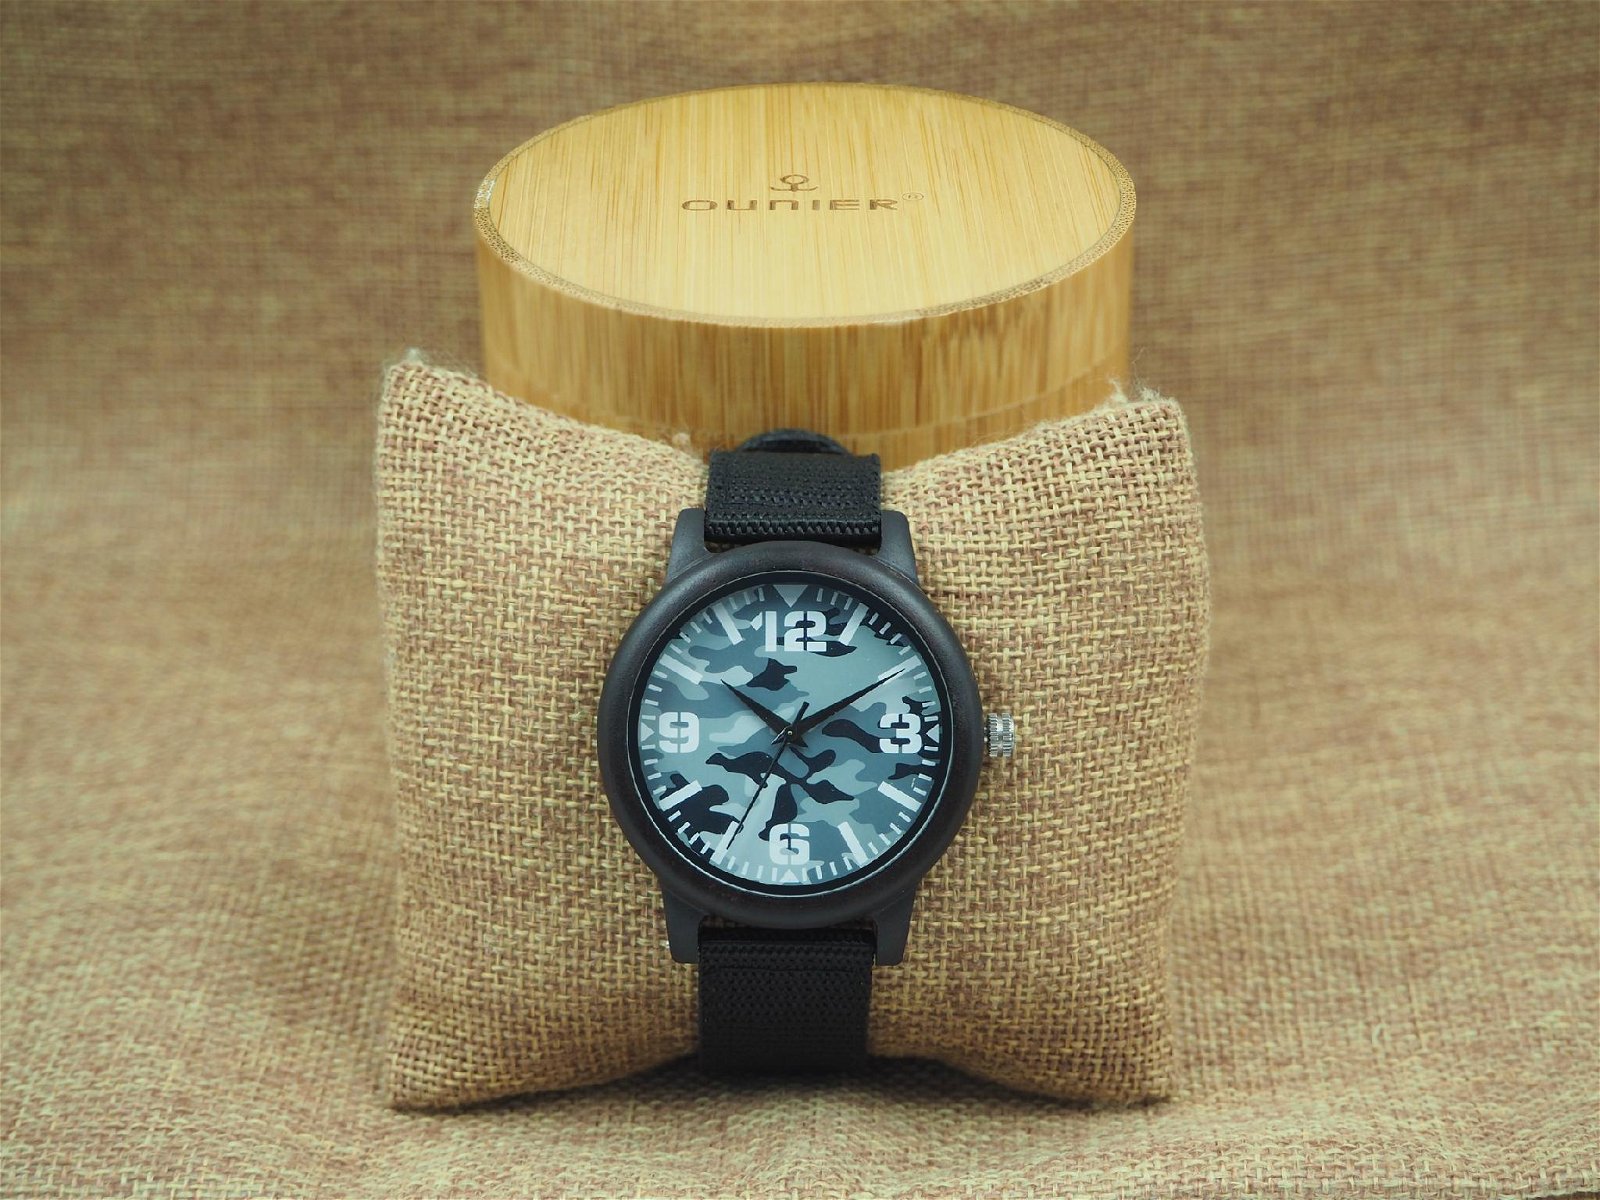 Wooden quartz wrist watches for men black leather band watch 3